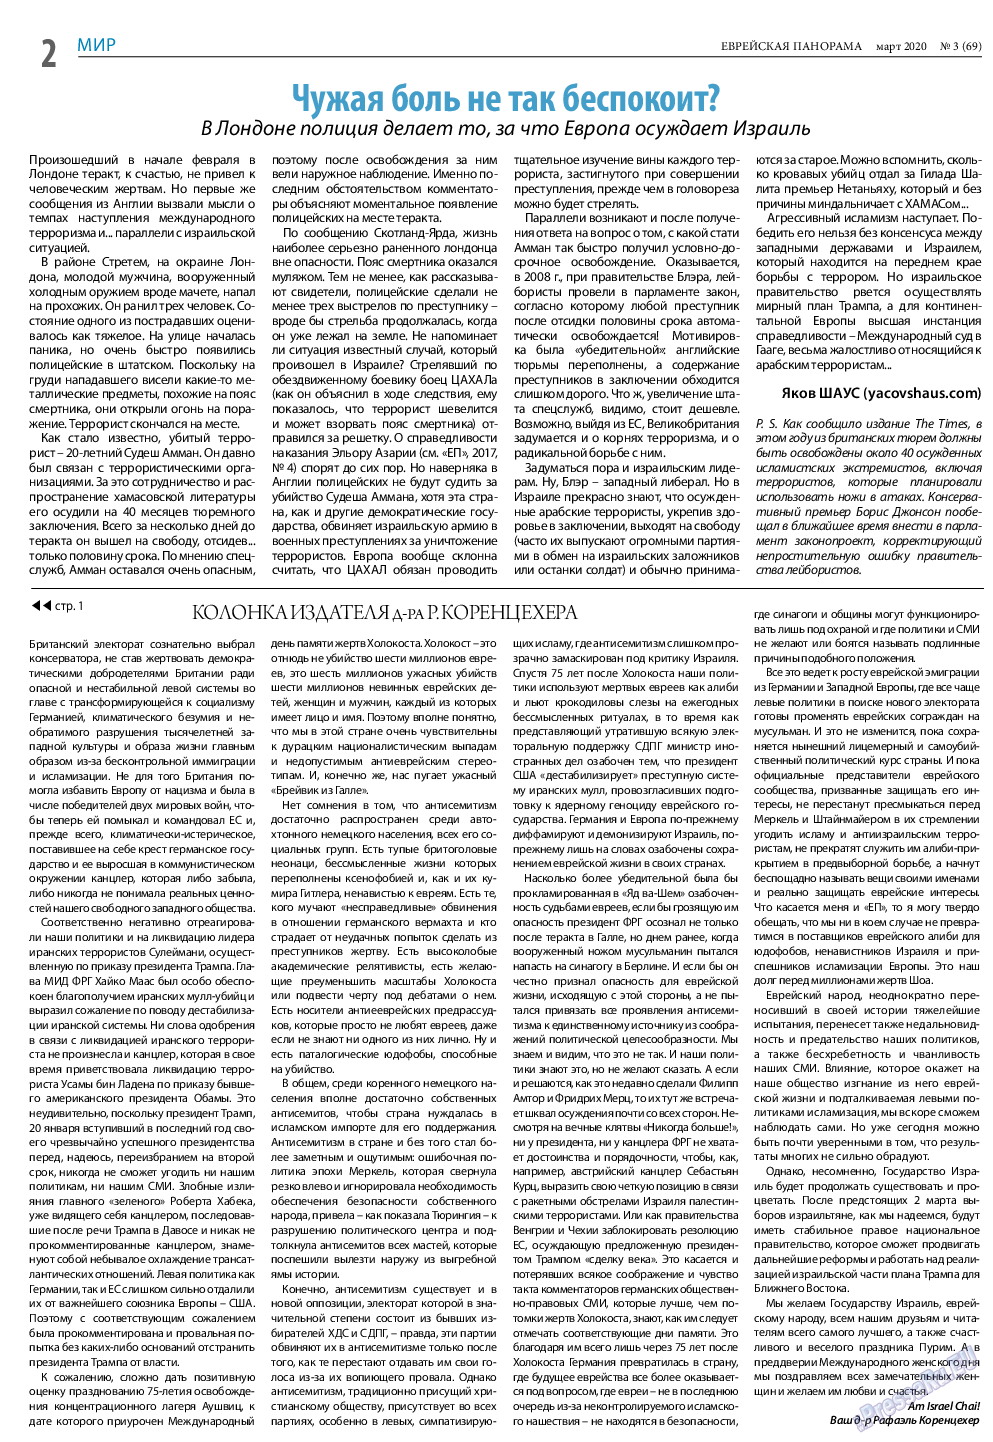 Еврейская панорама, газета. 2020 №3 стр.2